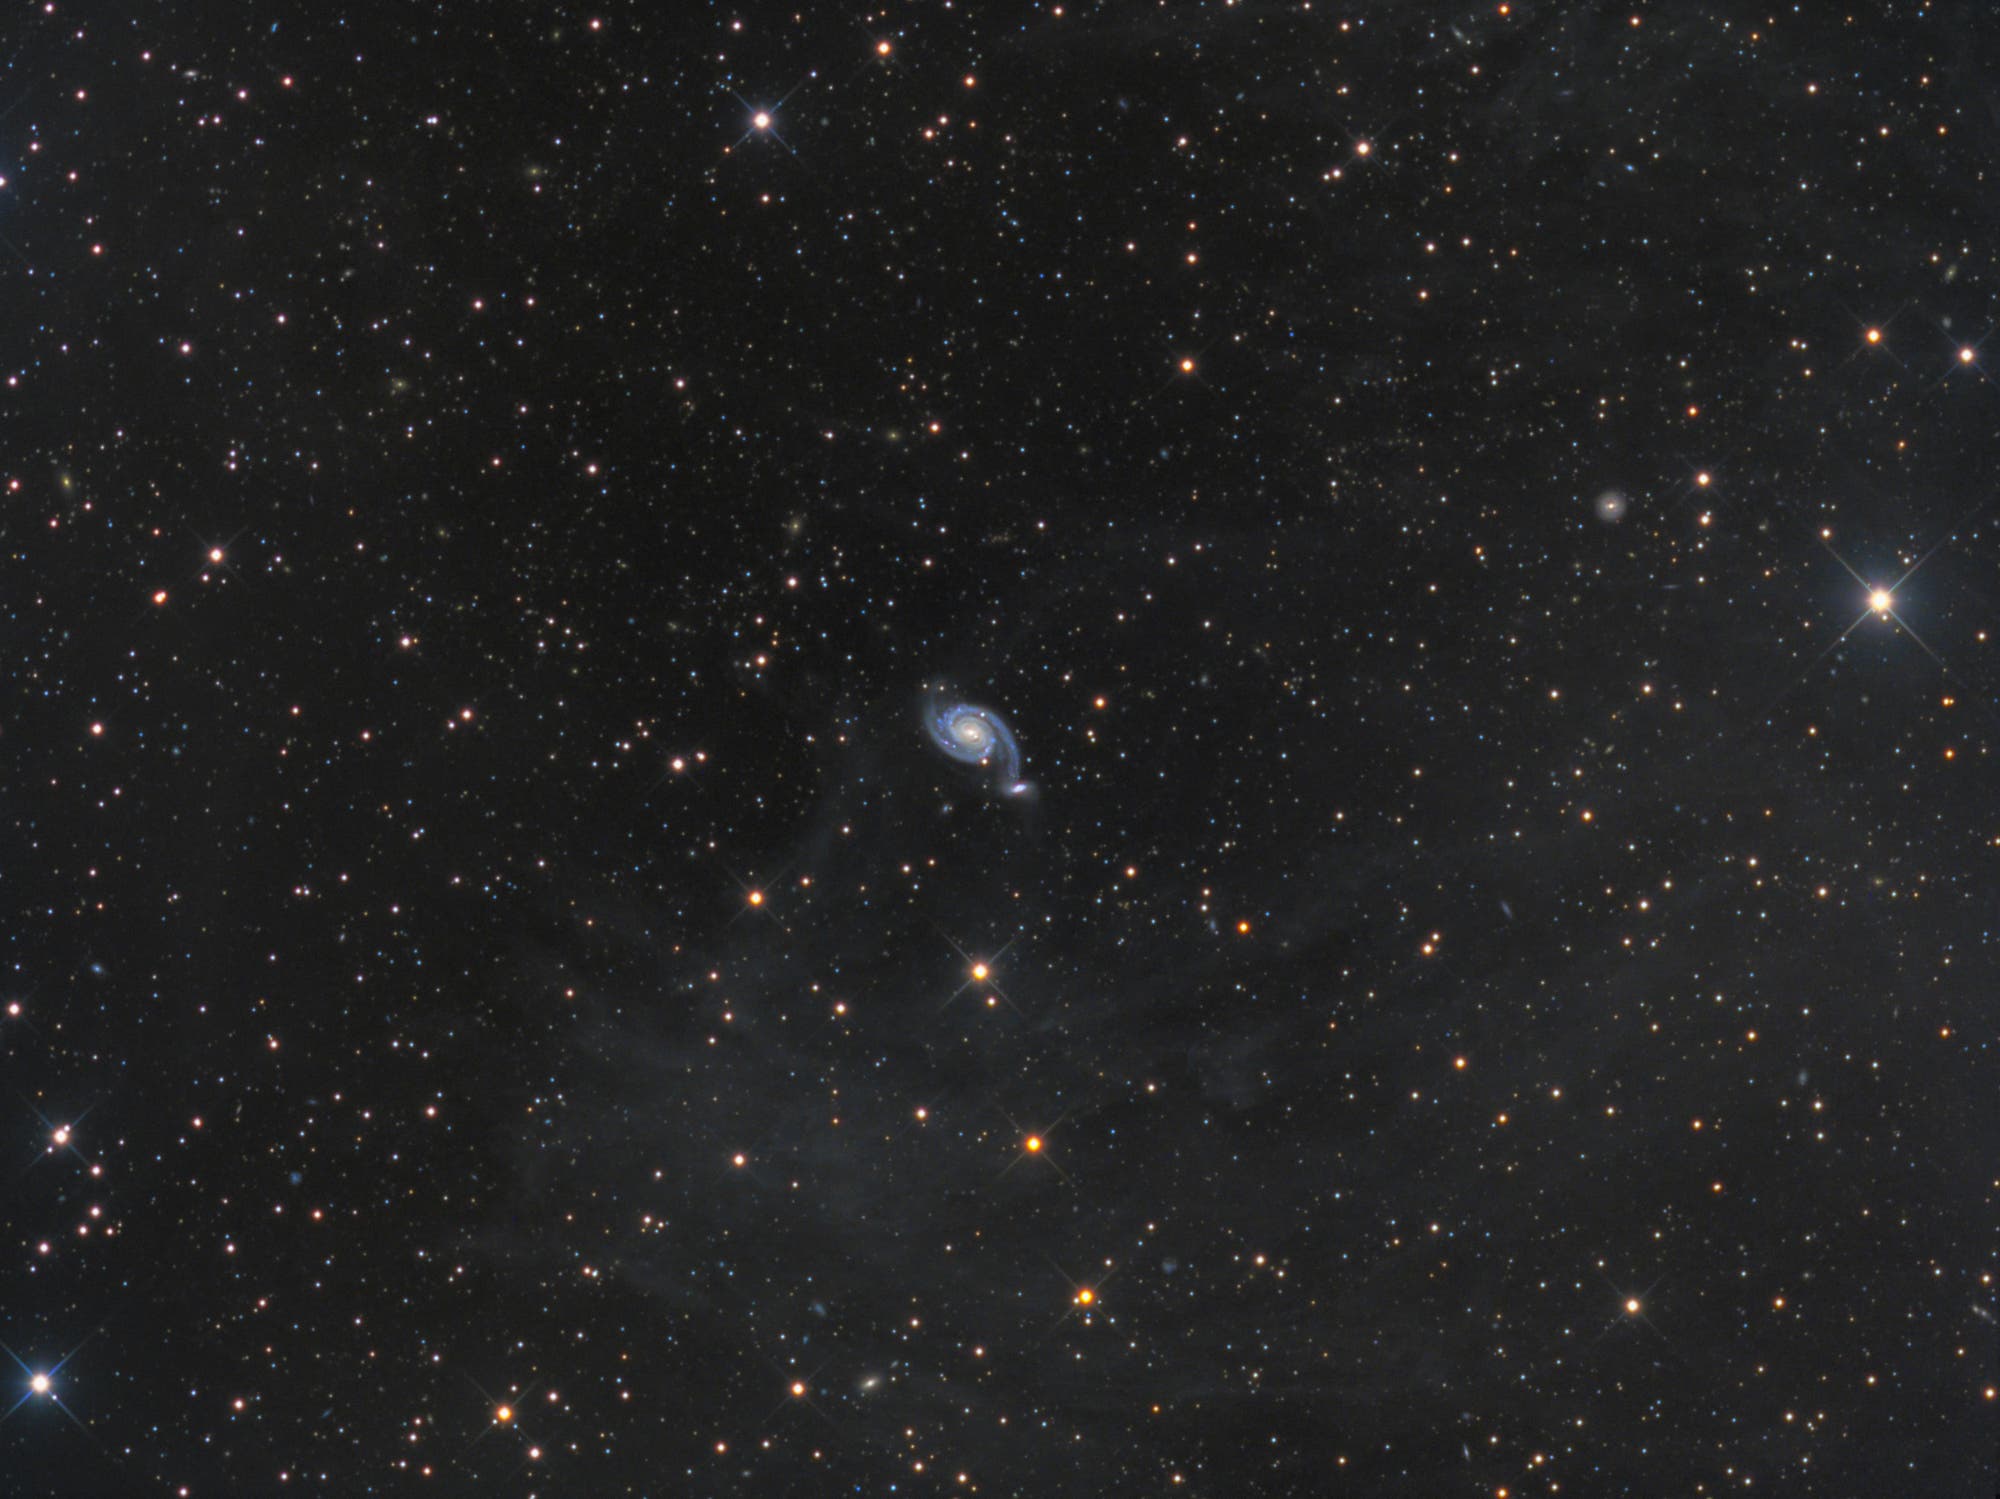 Galaxien Arp 86 (NGC 7753 und NGC 7752)